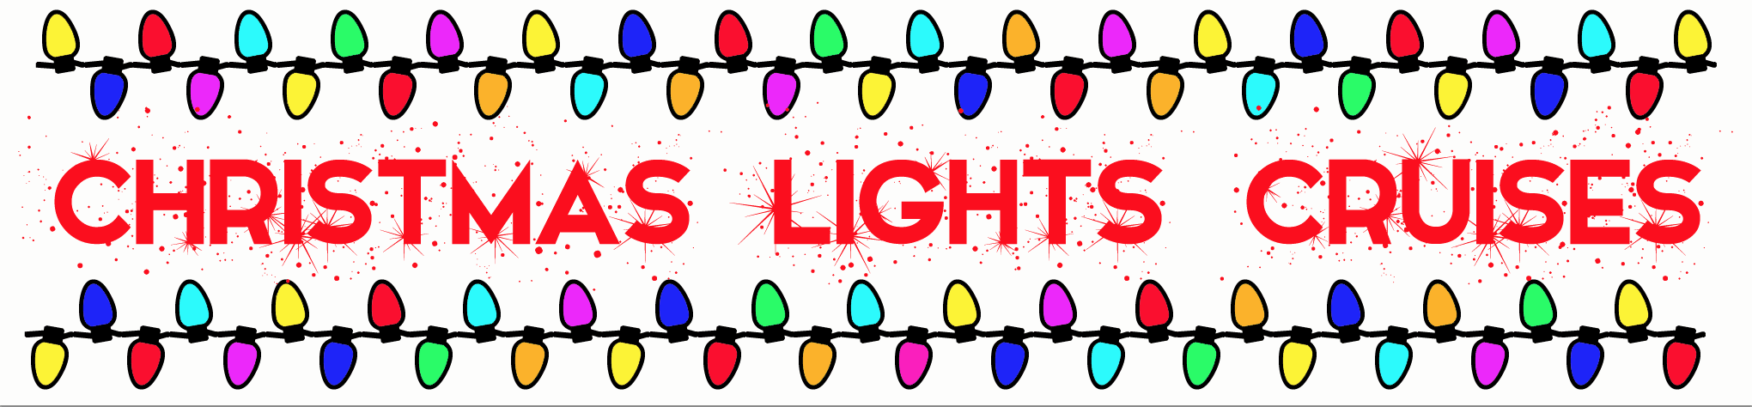 Christmas Lights Cruises - More Information Banner Header